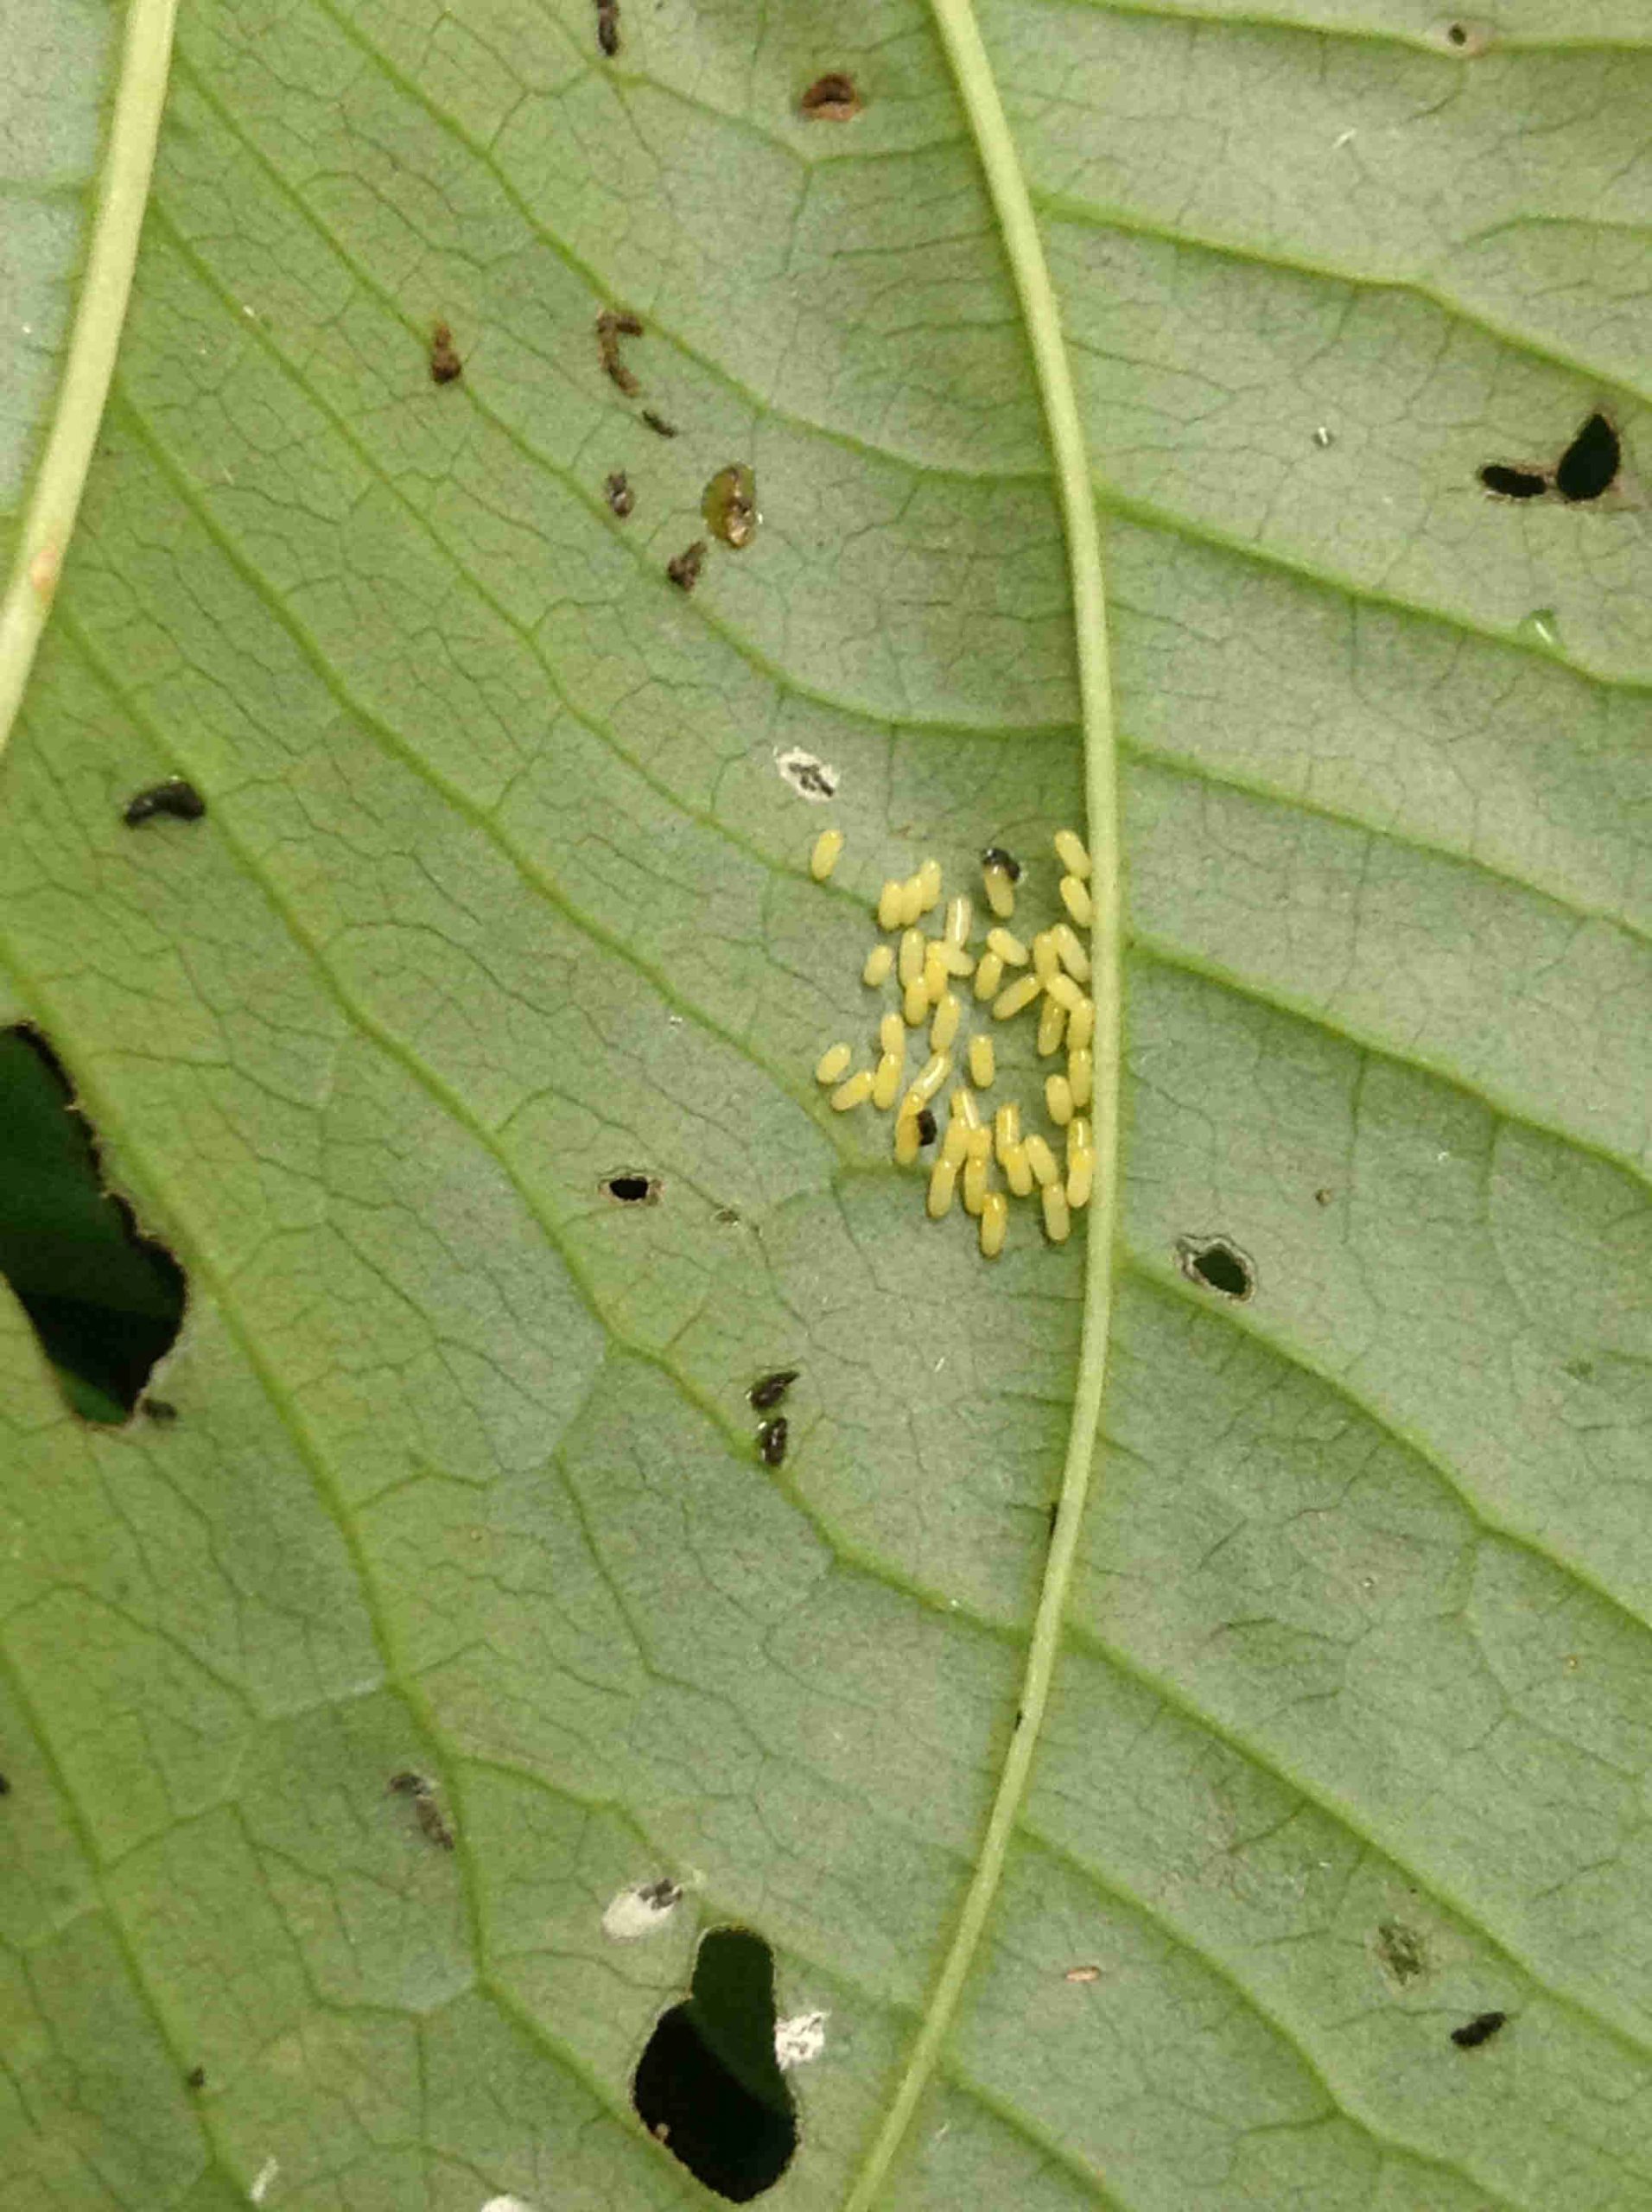 Air Potato Leaf Beetle Eggs